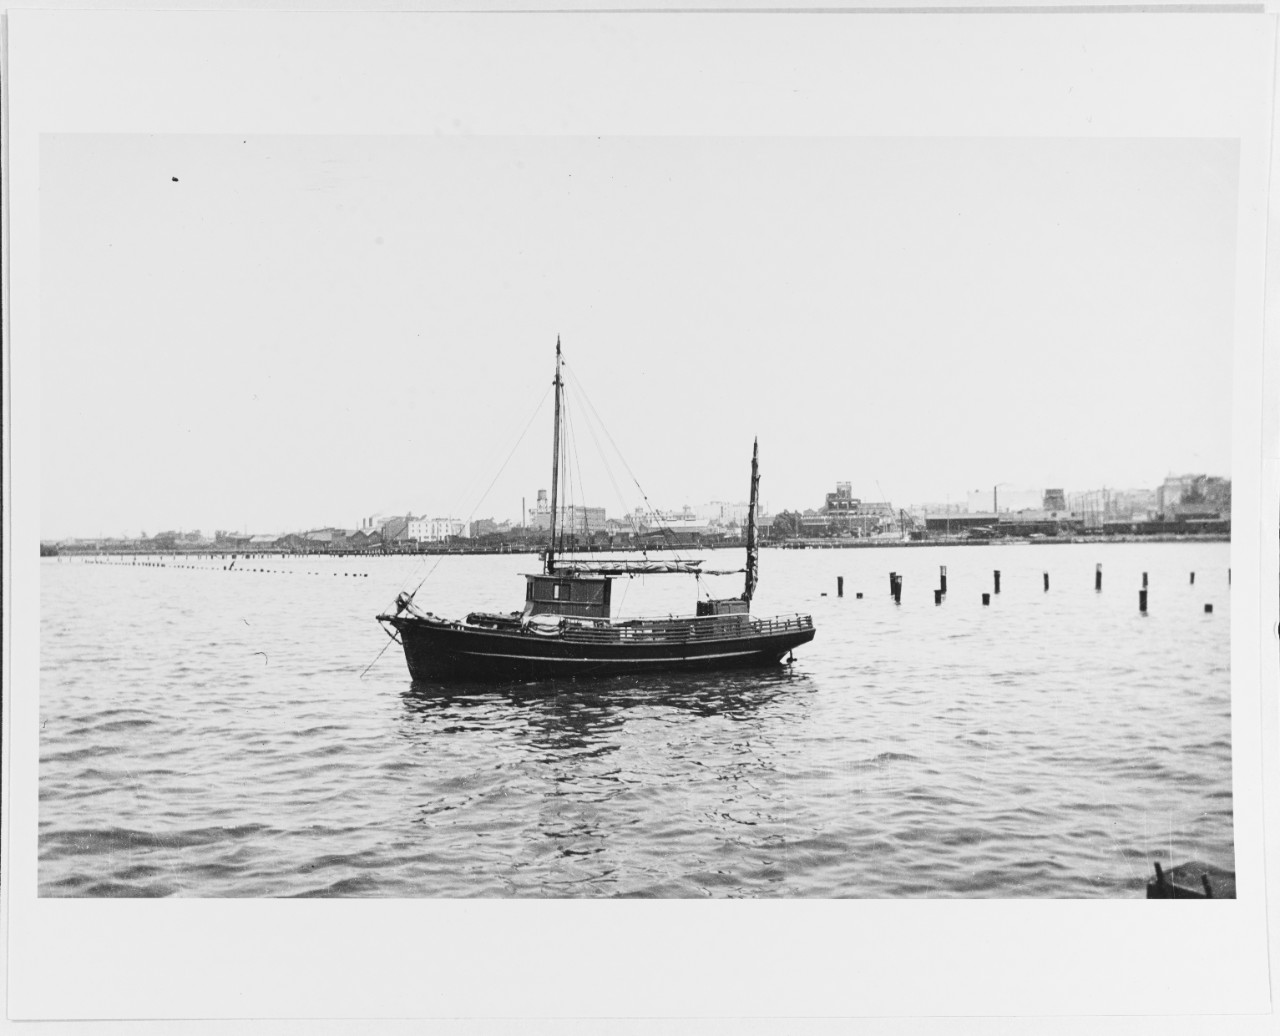 Unidentified miscellaneous small boat